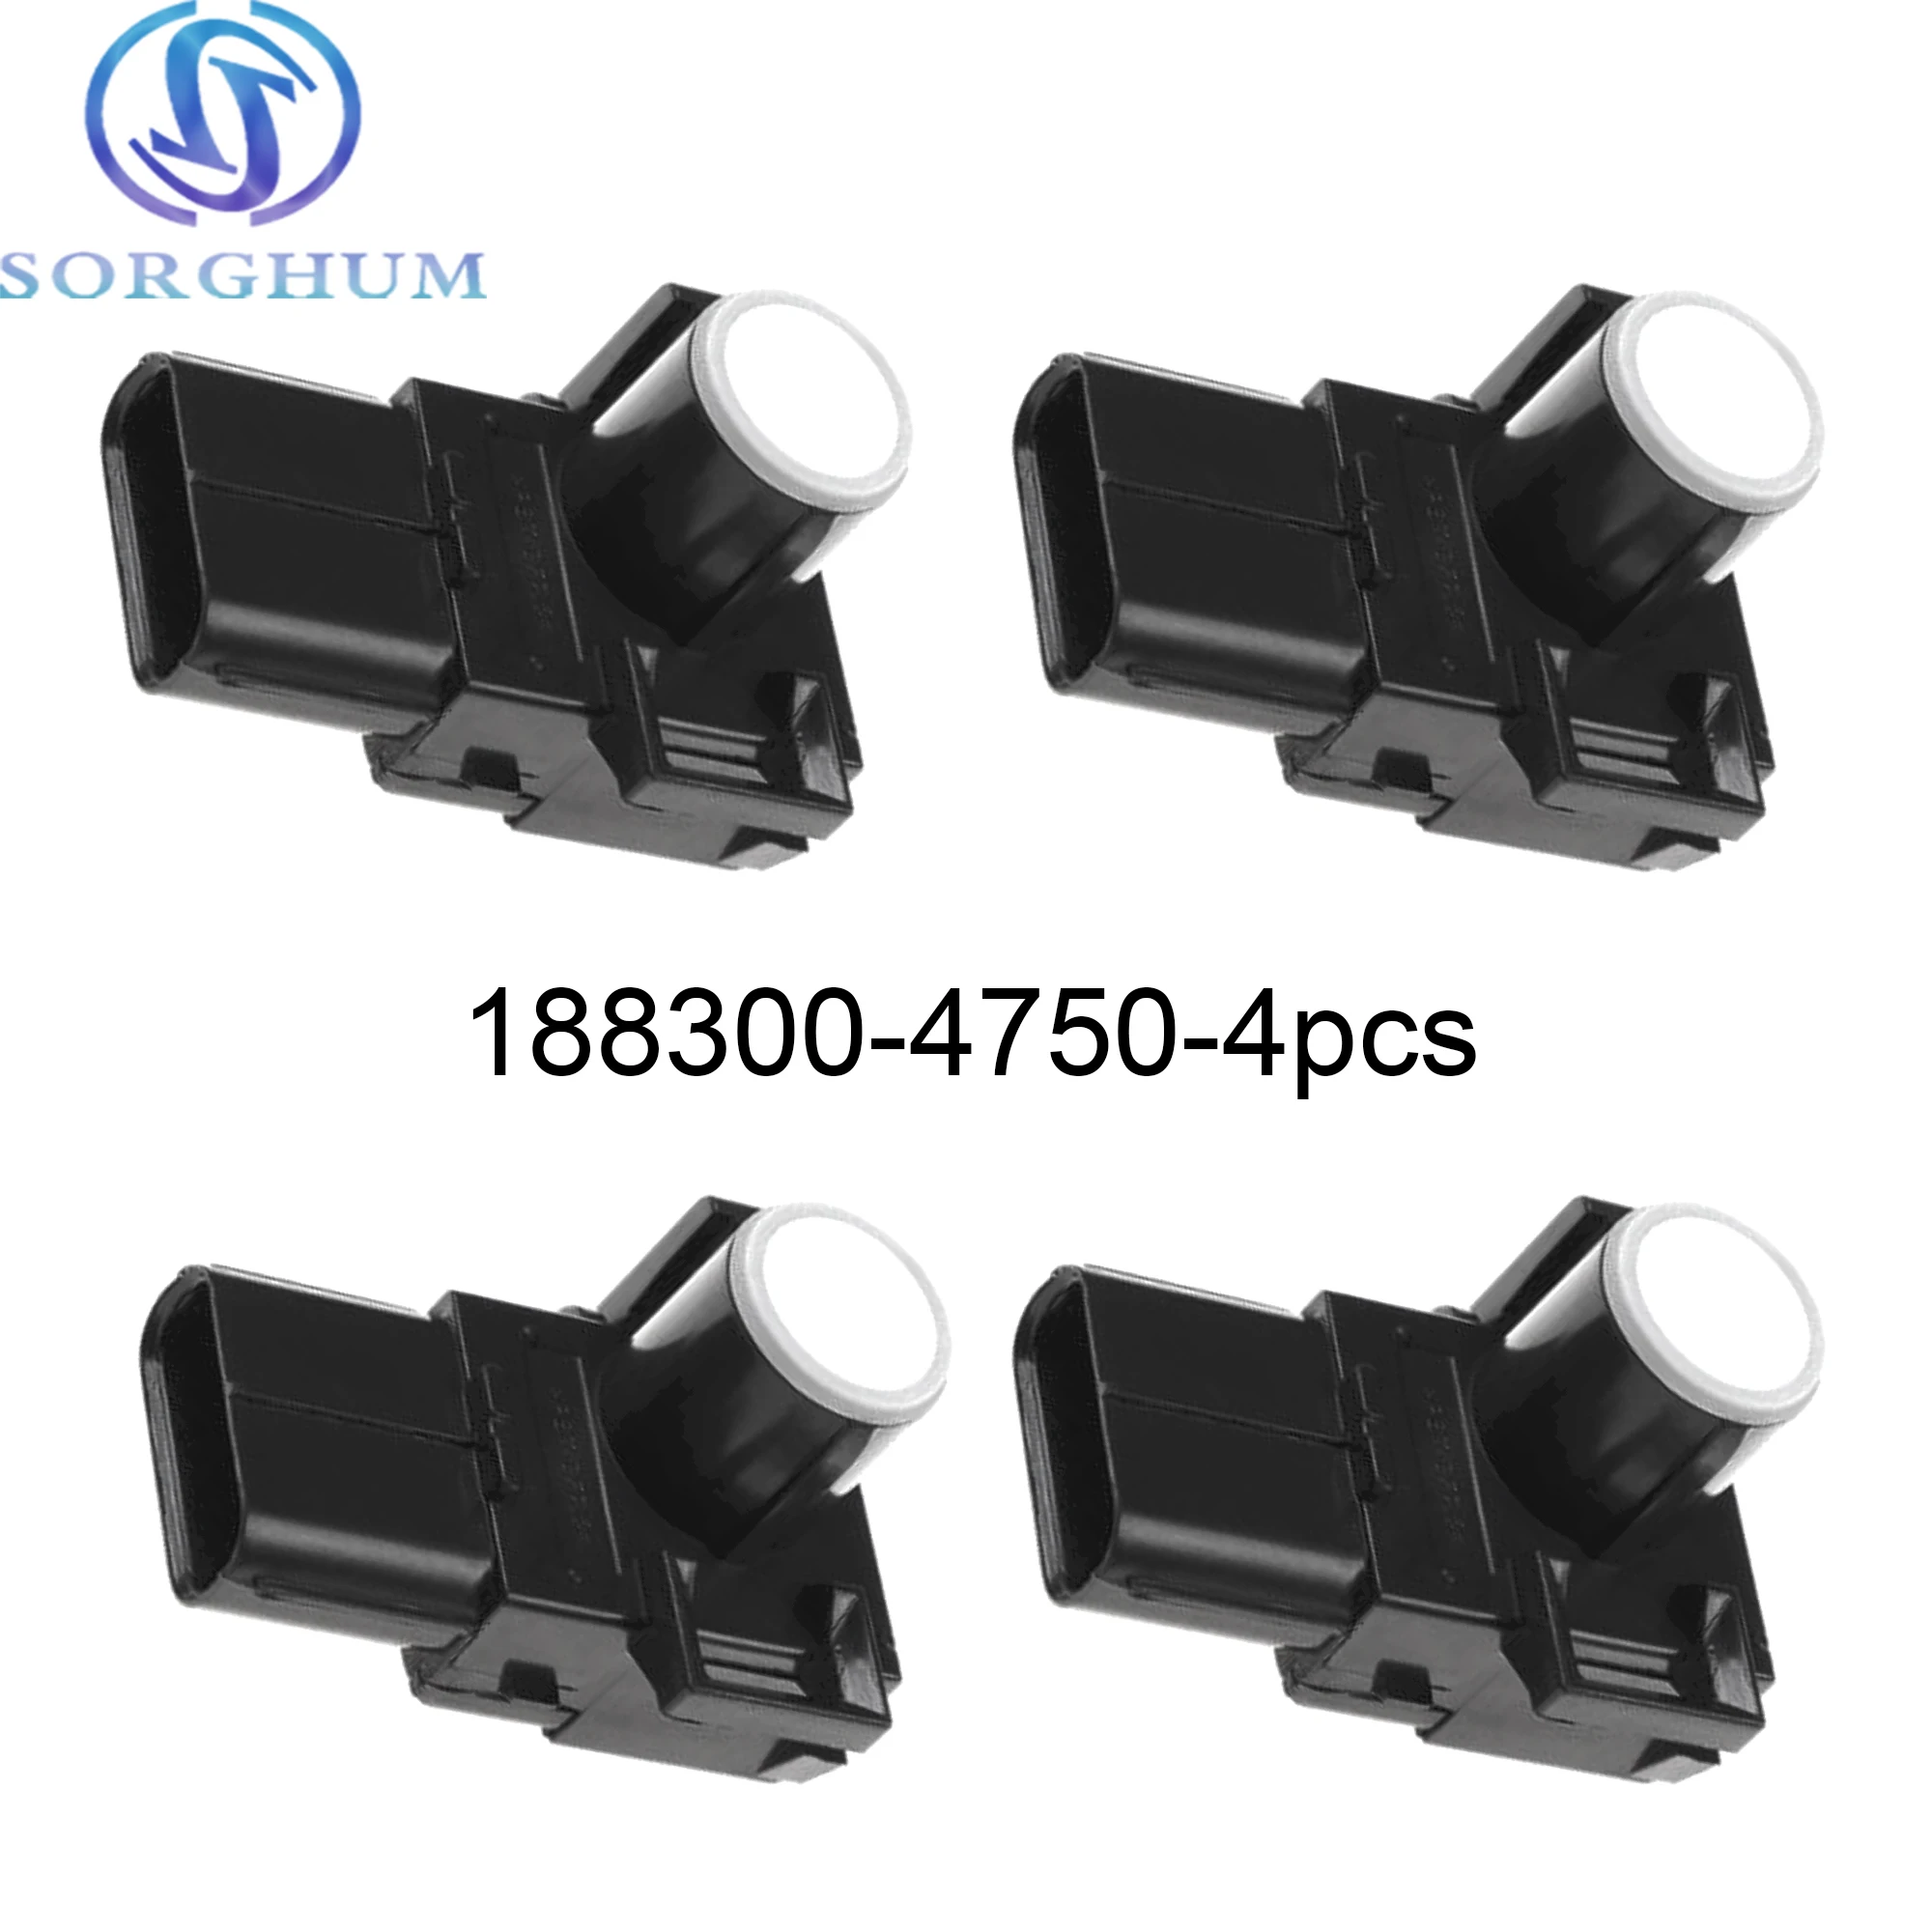 

4pcs 188300-4750 1883004750 PDC Parking Sensor Backup Reverse Parking Assist Sensor For Toyota Lexus